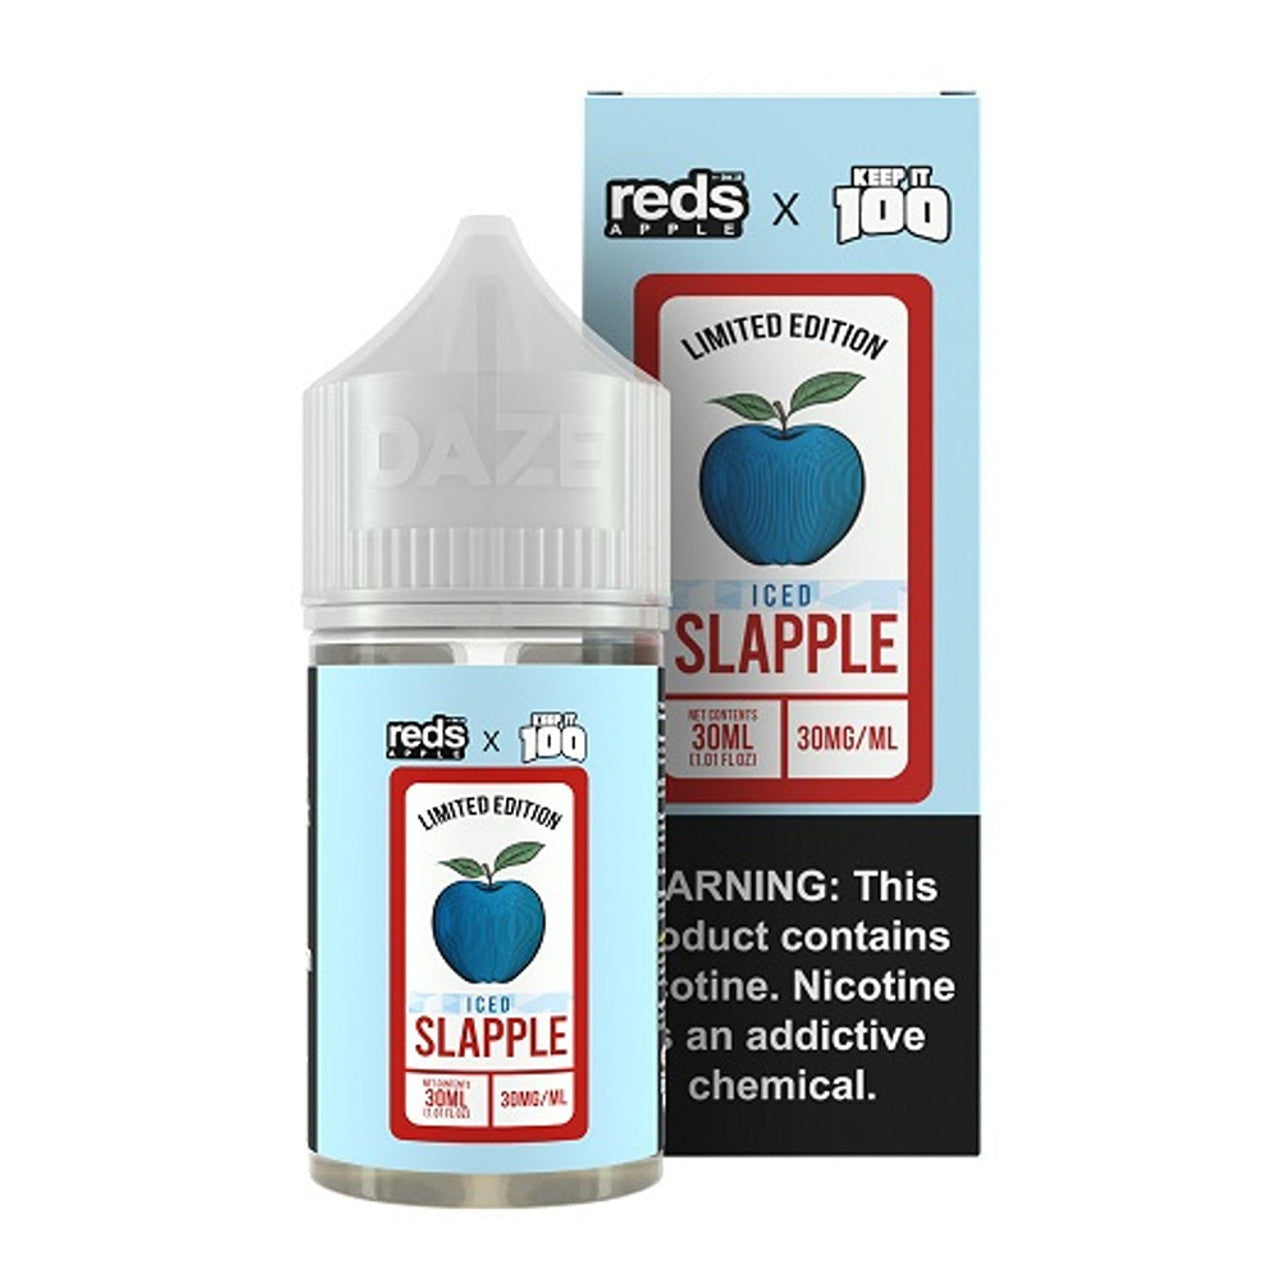 Reds Apple x Keep It 100 Limited Edition Nicotine Salt E-Liquid By 7 Daze 30ML - Online Vape Shop | Alternative pods | Affordable Vapor Store | Vape Disposables